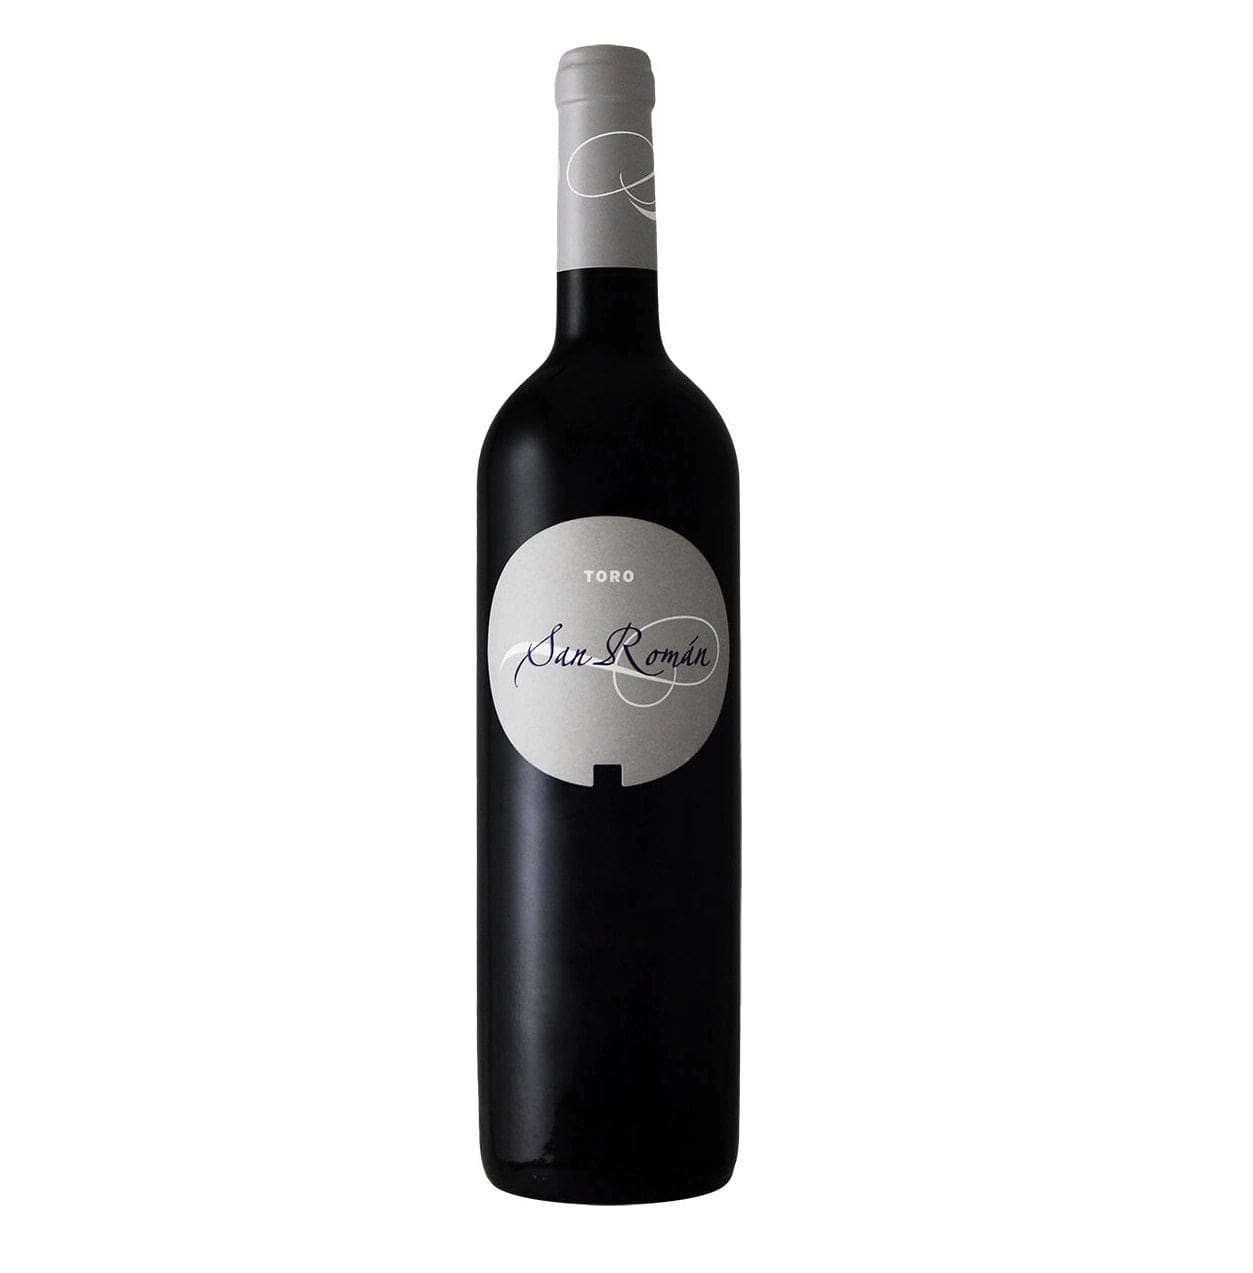 Single bottle of Red wine Bodegas San Roman, Toro, Castilla y Leon, 2016 100% Tempranillo